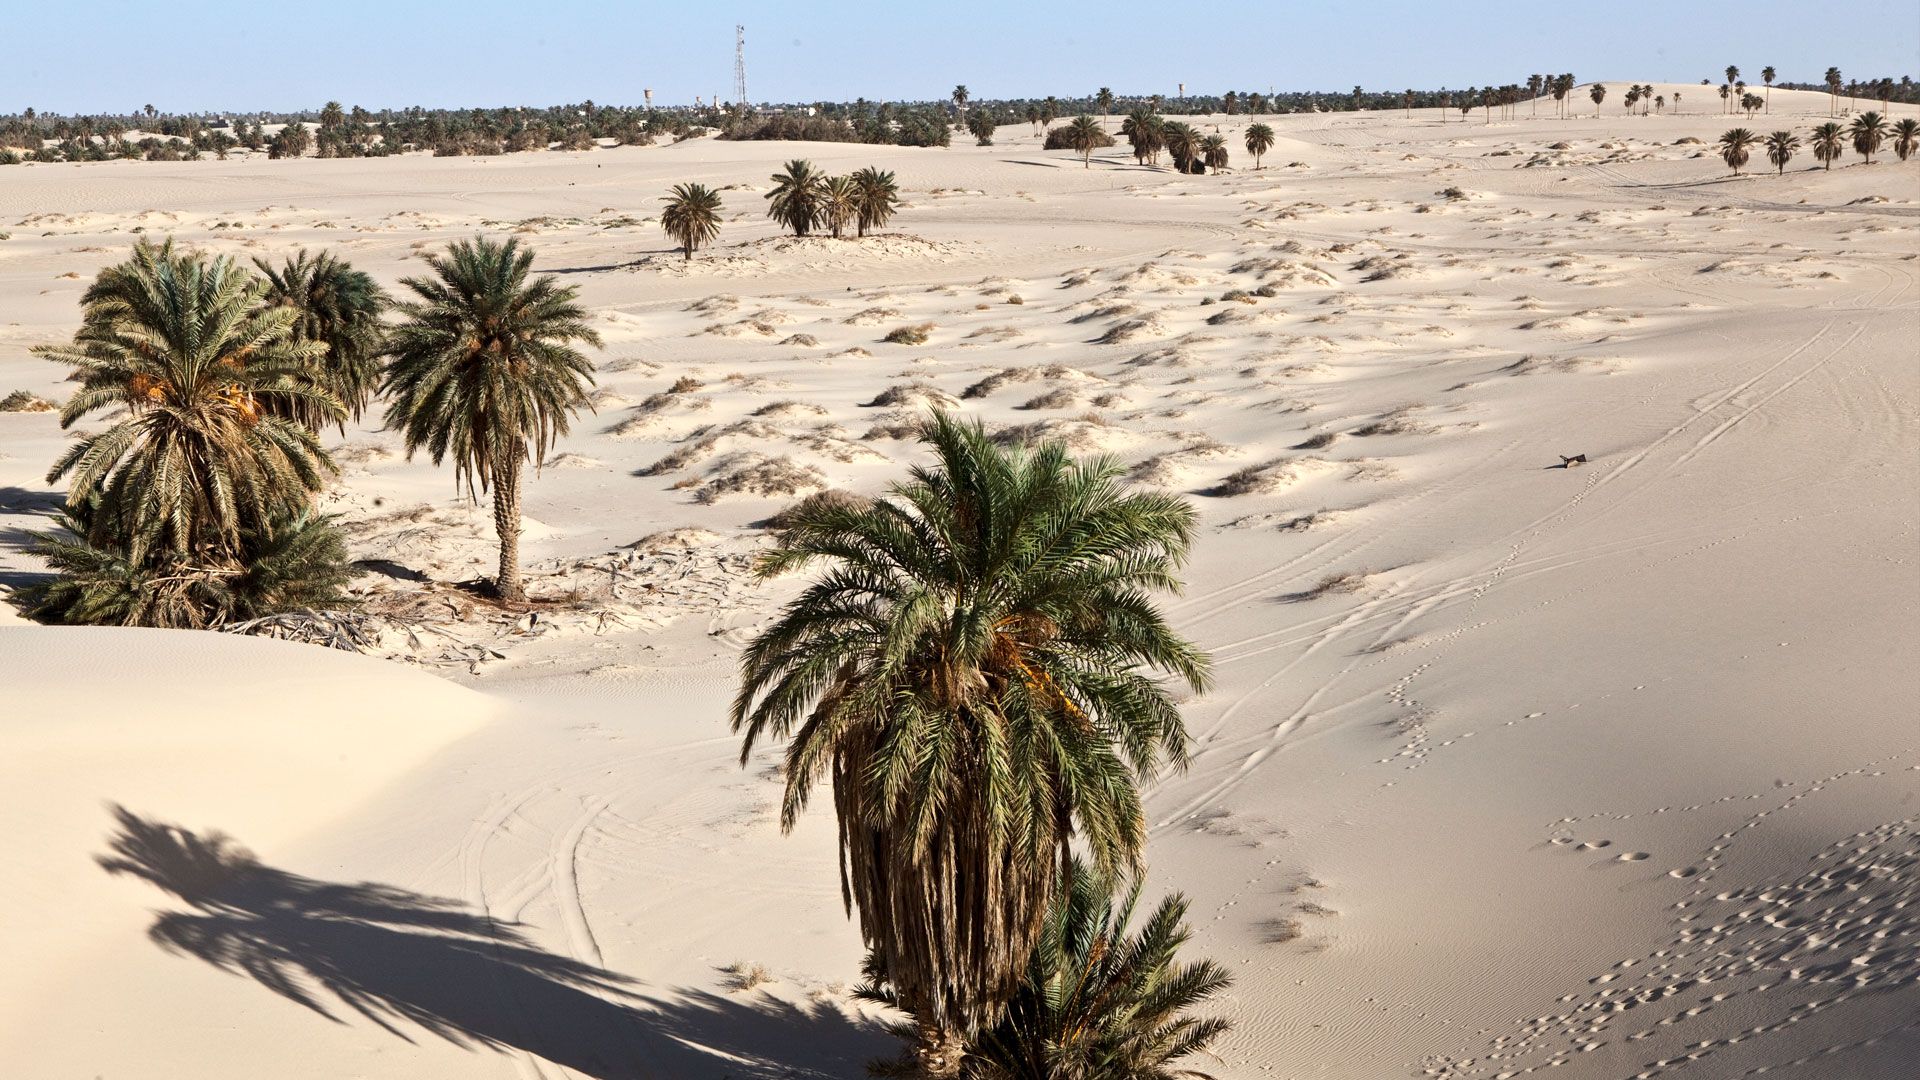 Wintershall Dea Libya Desert Oasis